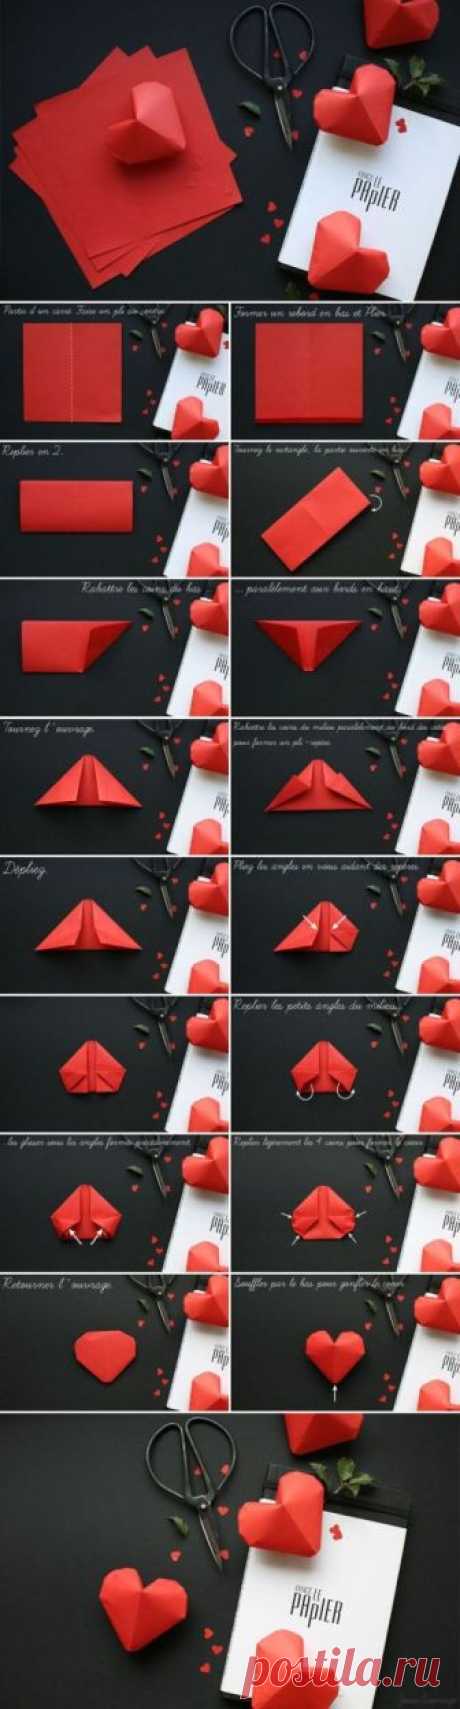 love-this-pic-dot-com:
“DIY Paper Hearts
”